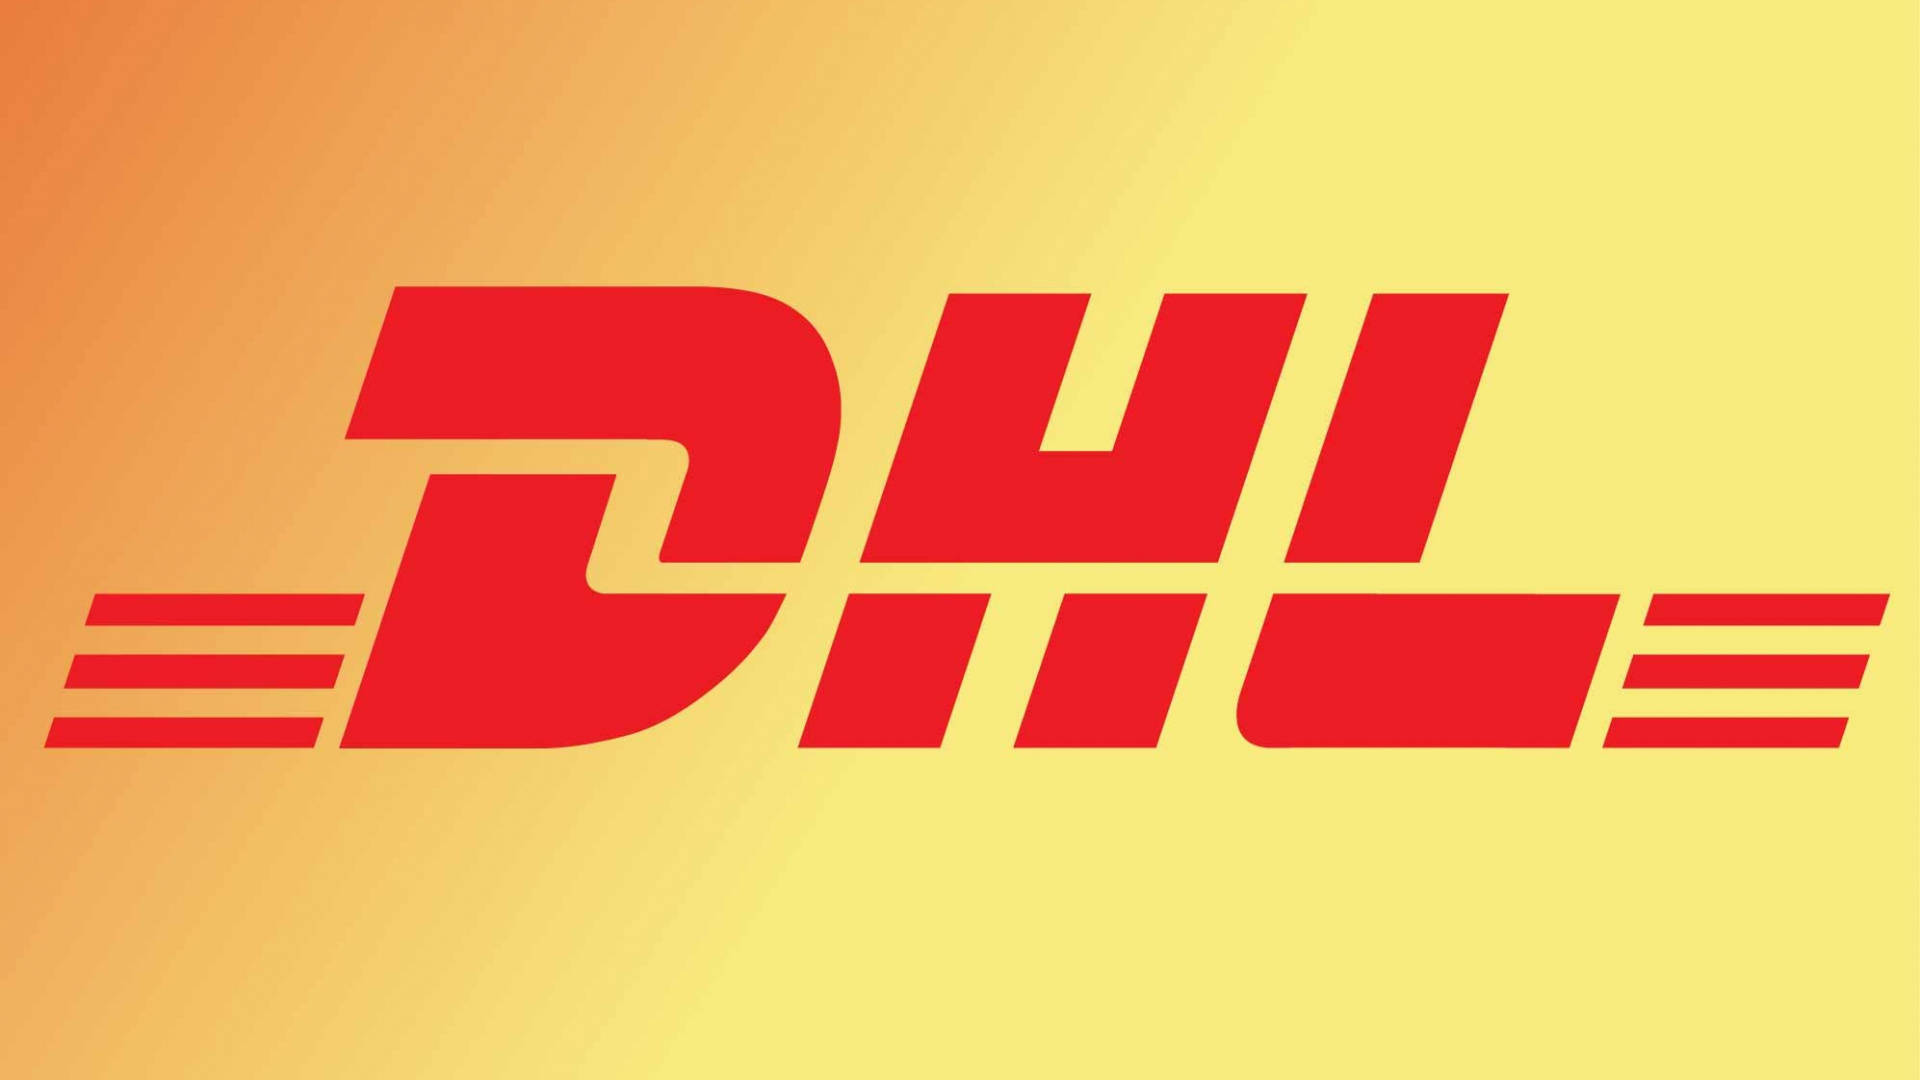 Cool Red DHL Logo Wallpaper